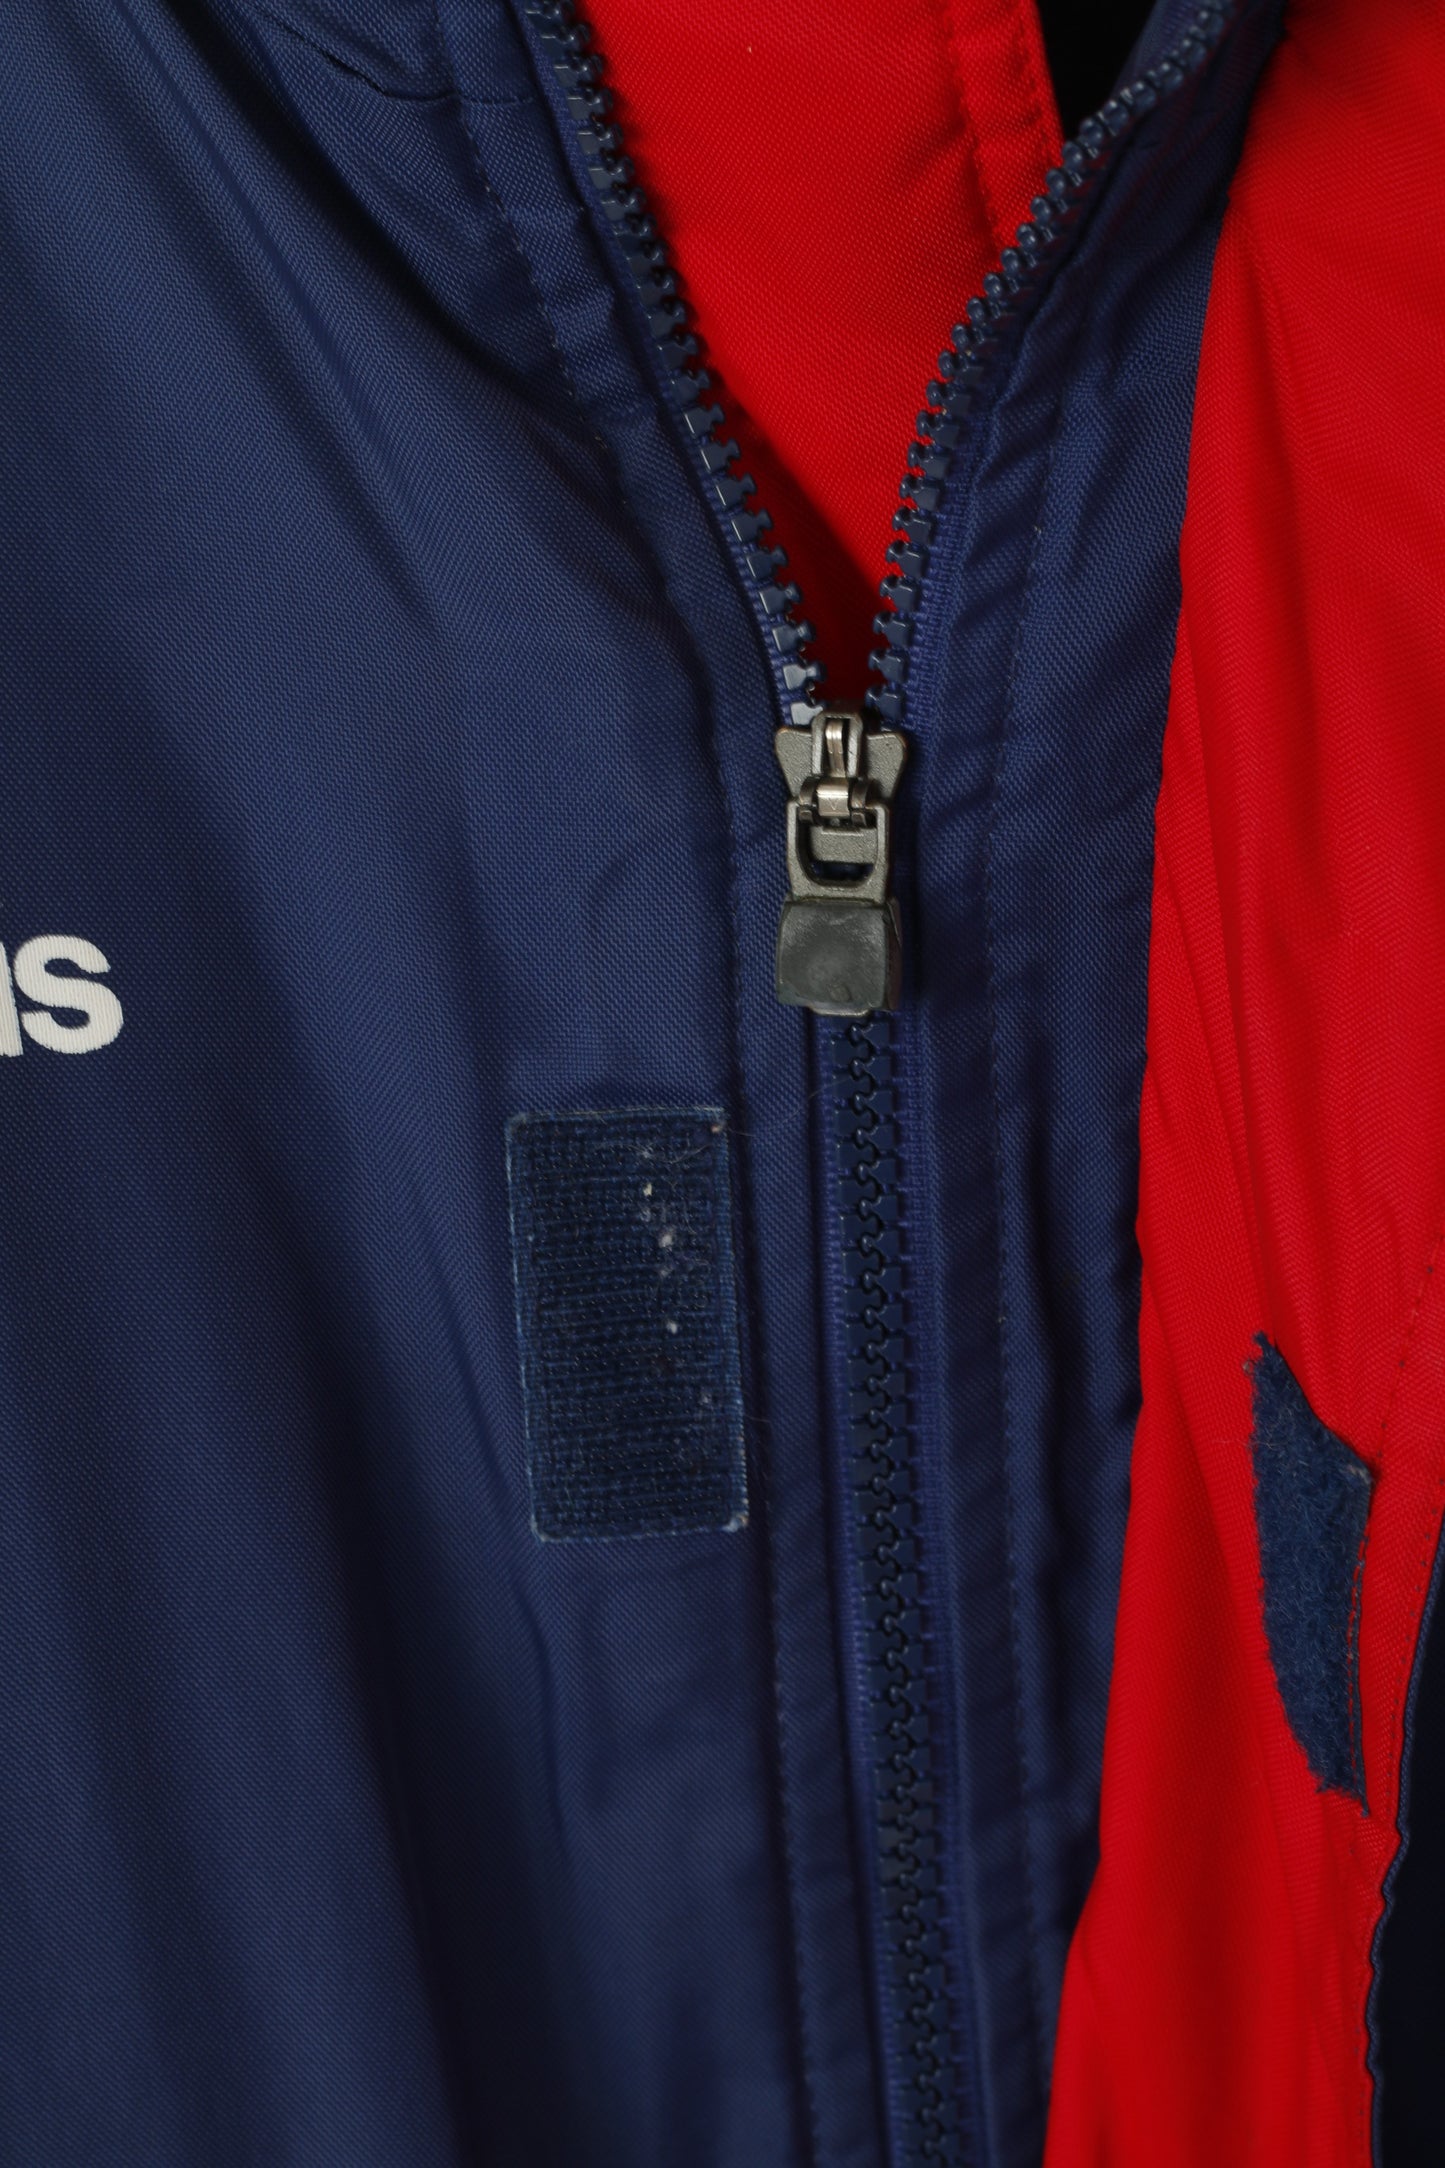 Adidas Men S 168 Jacket Vintage Blue Red Padded Nylon Waterproof 01's Parka